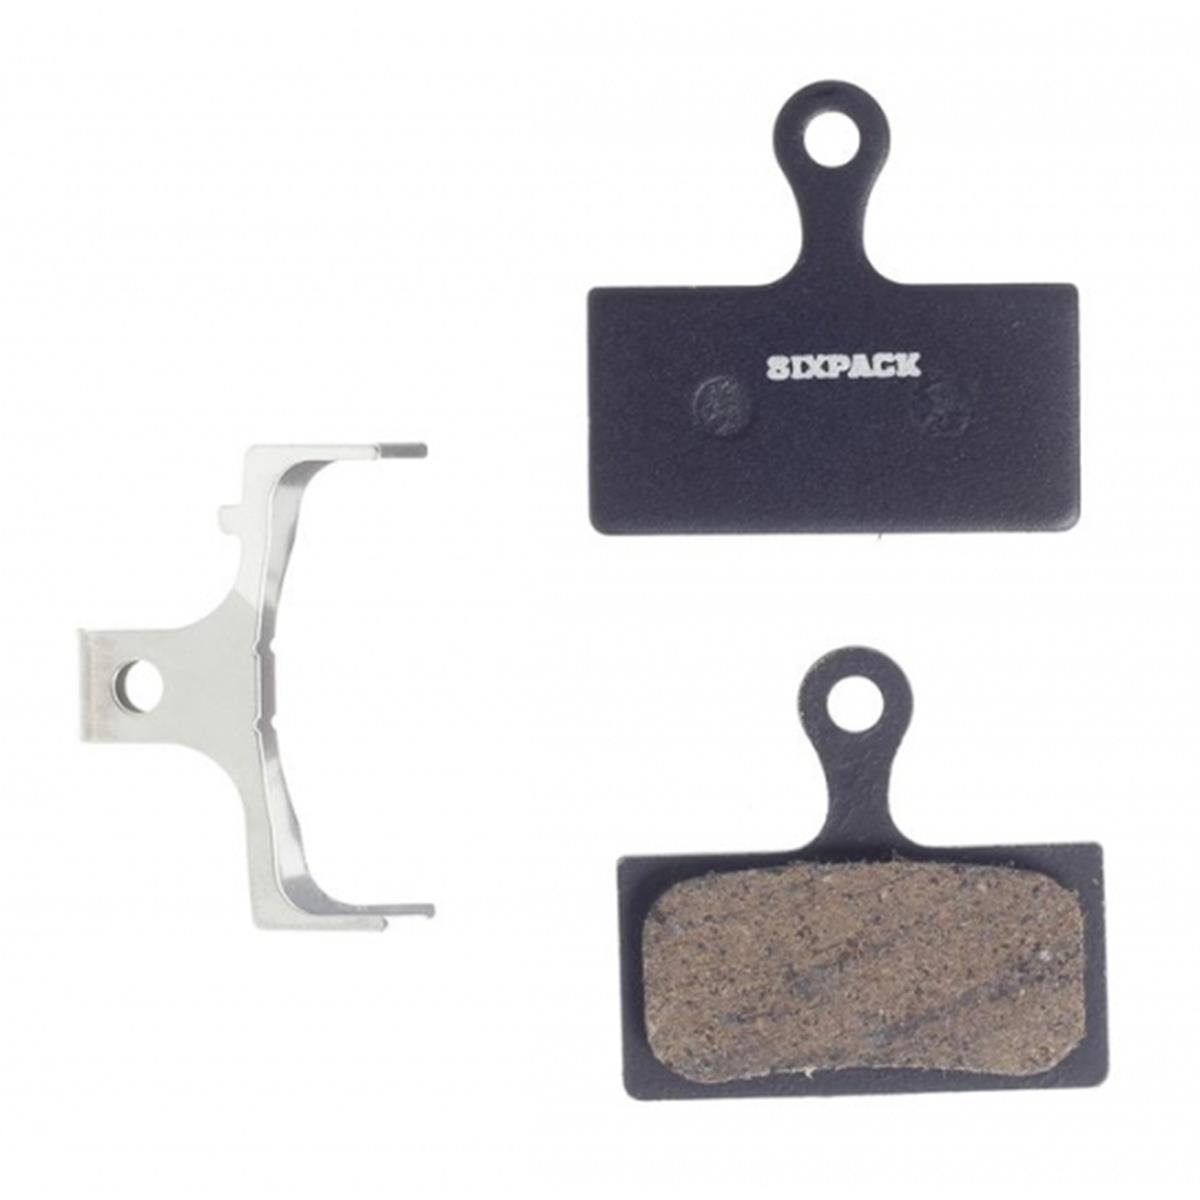 Sixpack MTB Disc Brake Pad Shimano Semi Metallic for Shimano XTR,/XT/SLX (IcetechR compatible)